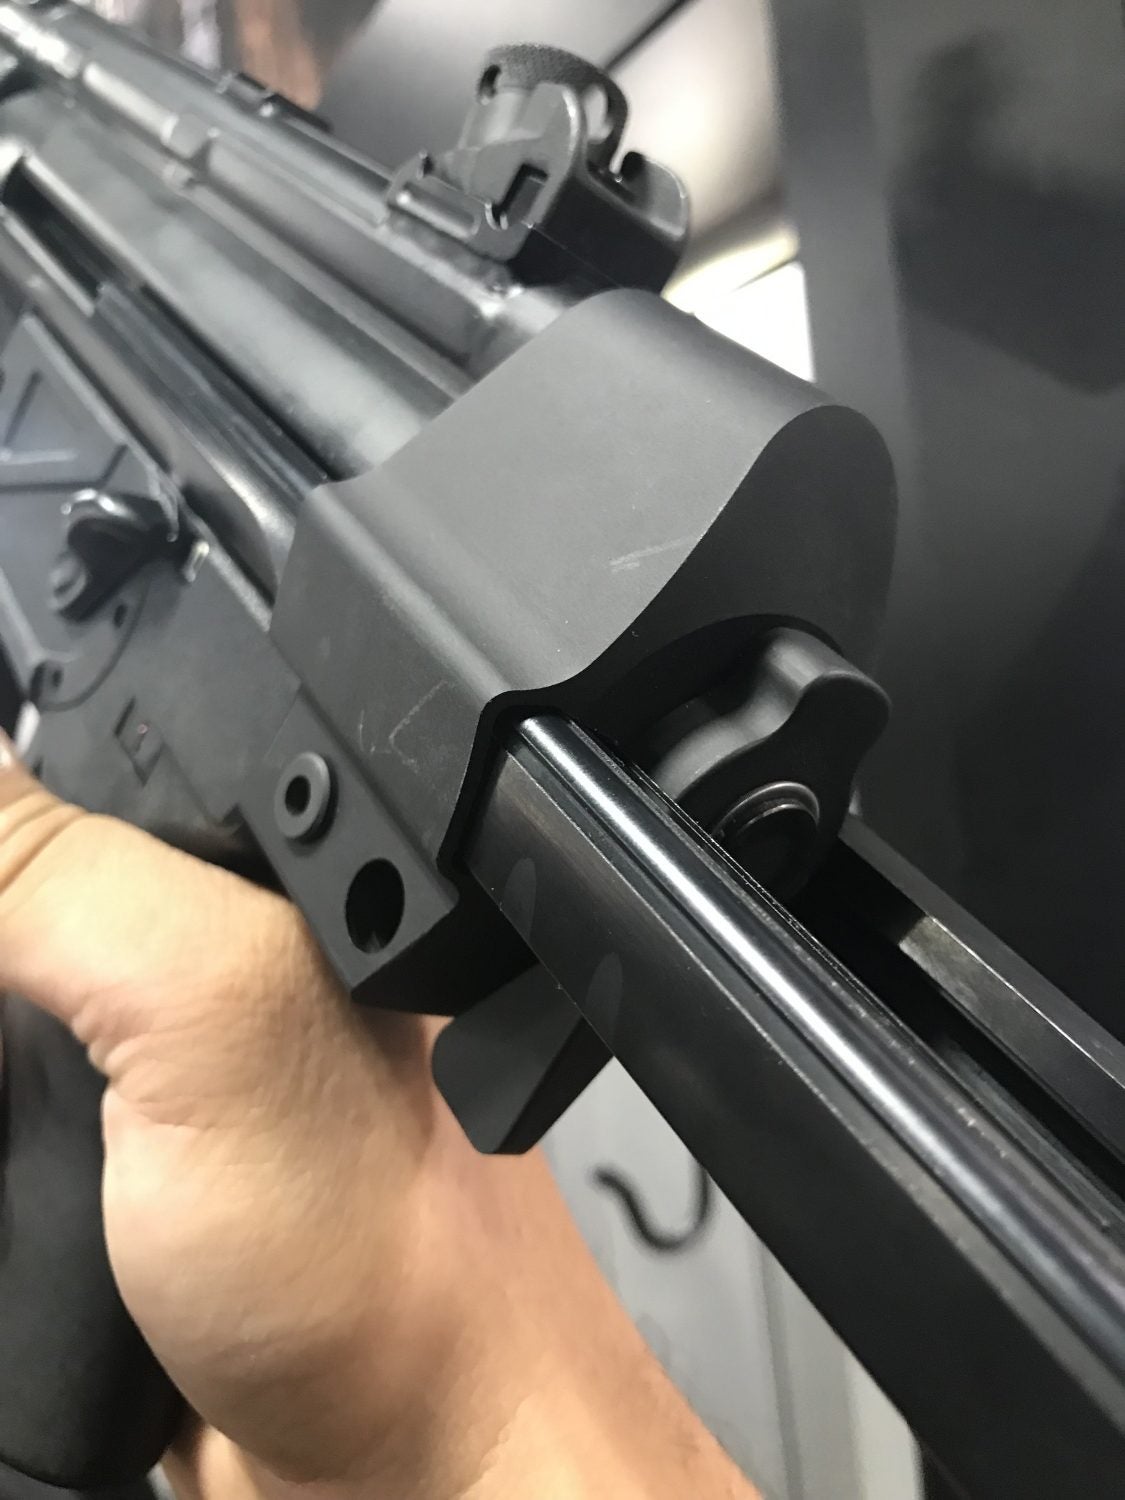 Shot 2019 Sb Tactical Mp5 Hkpdw Brace The Firearm Blog. 